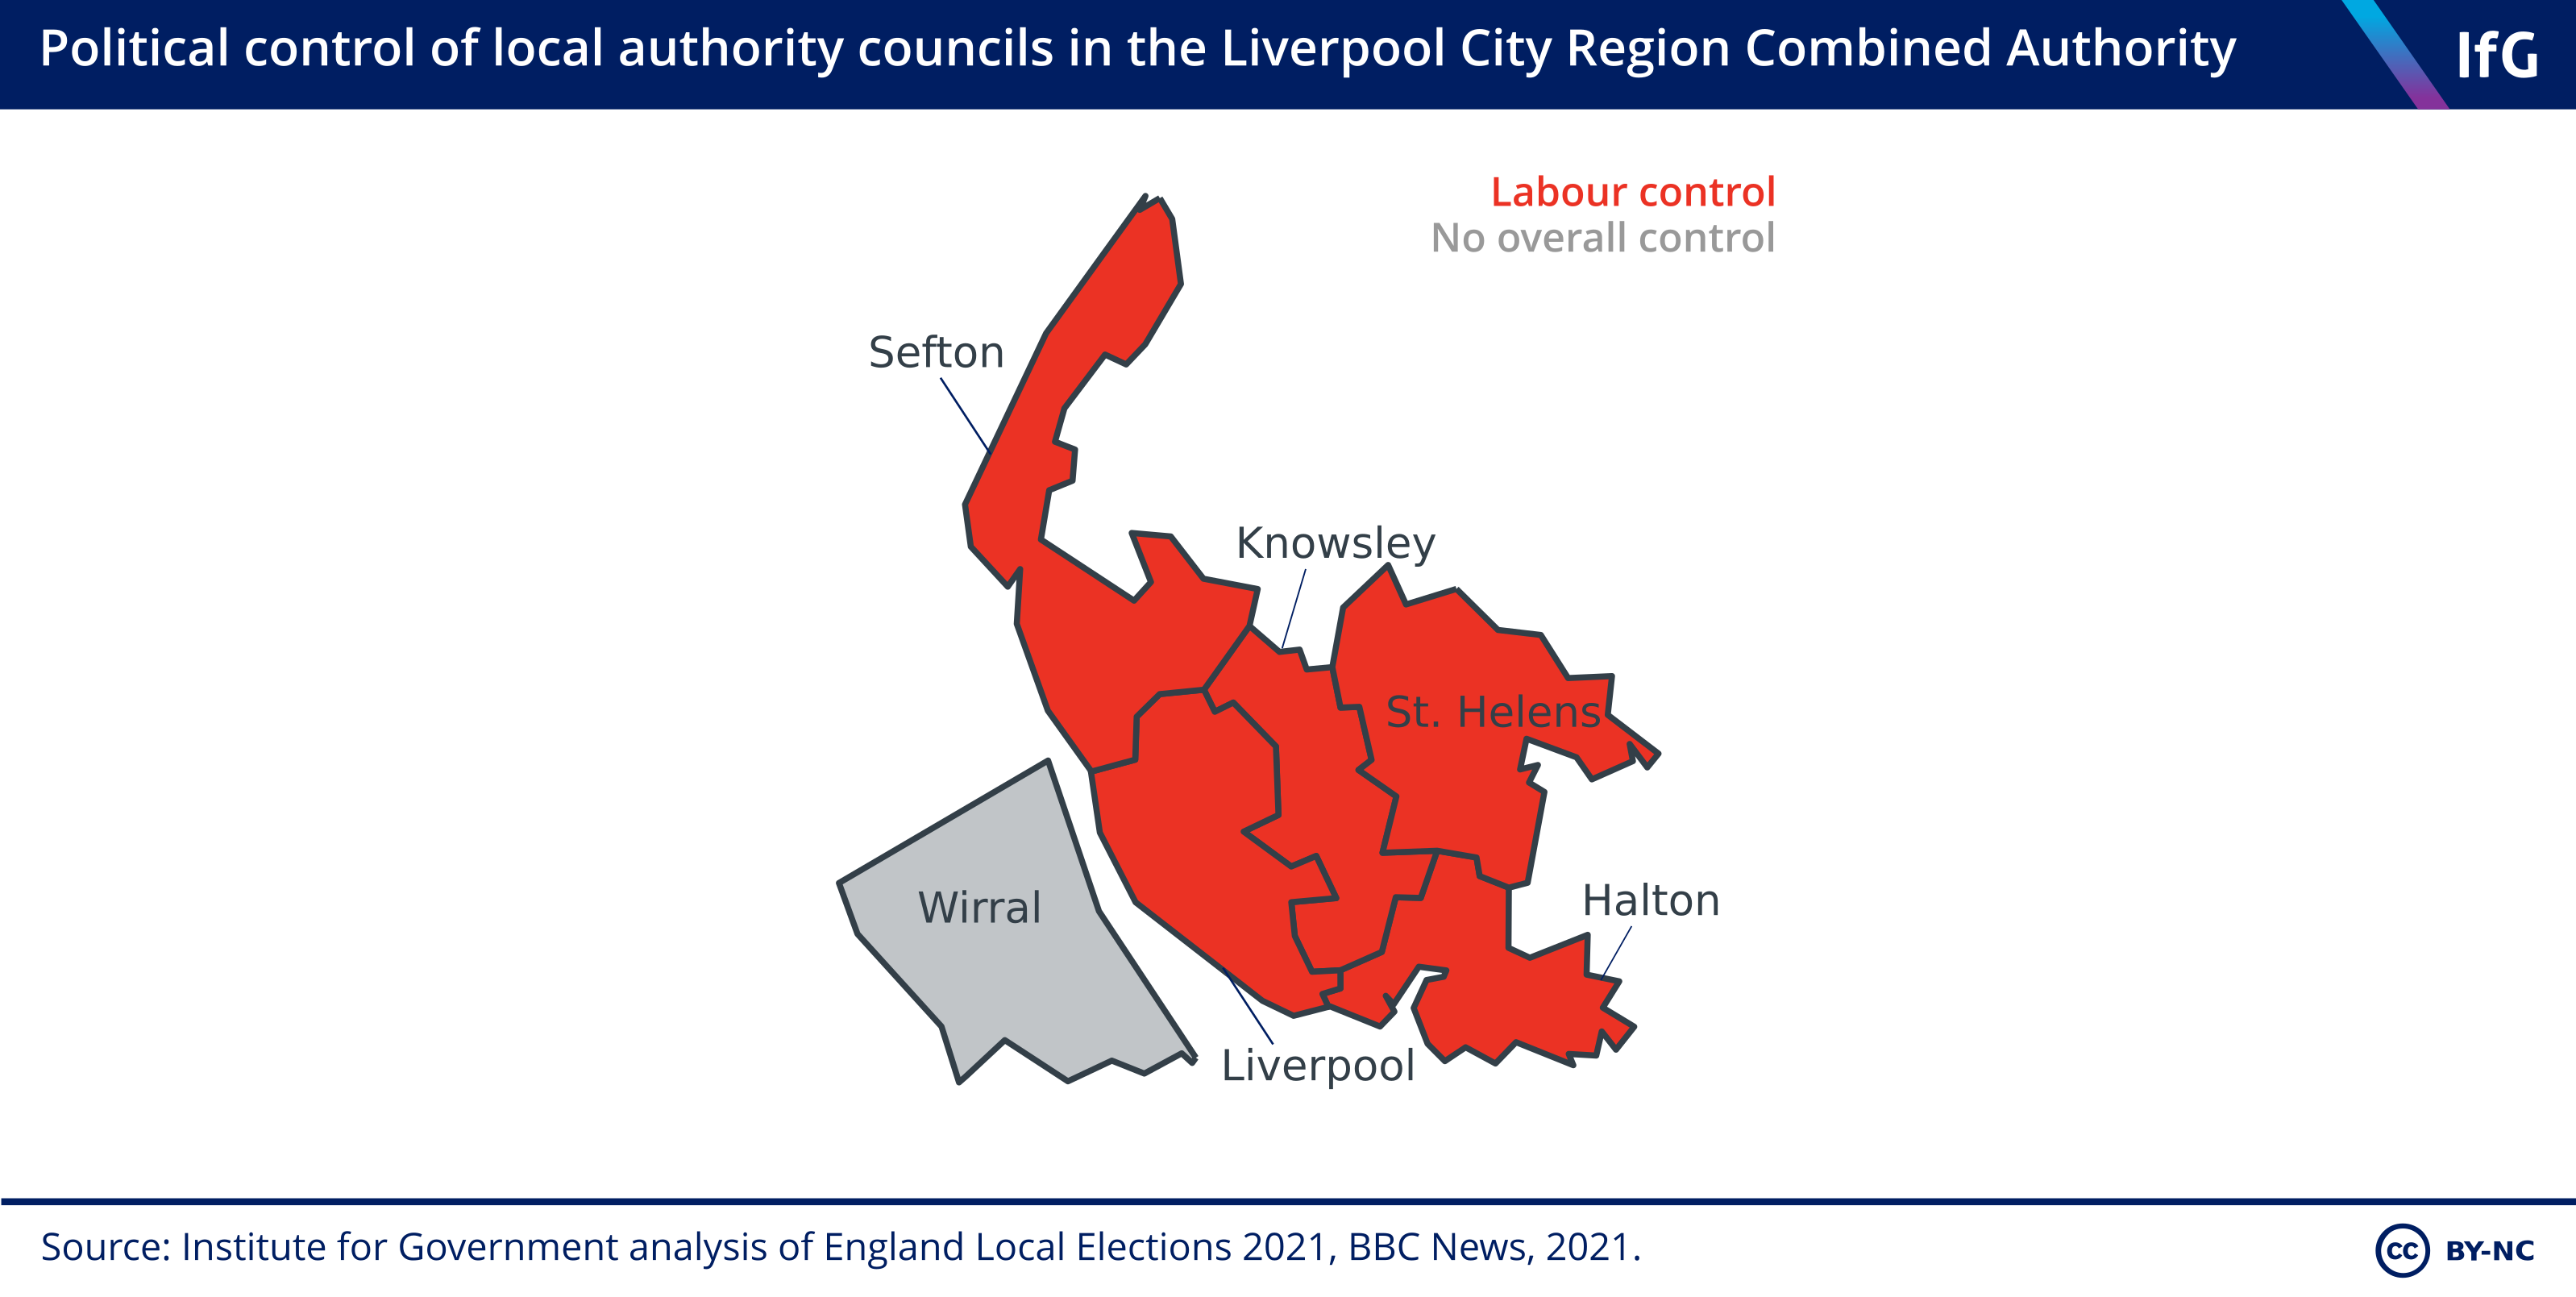 Council control across the LCRCA